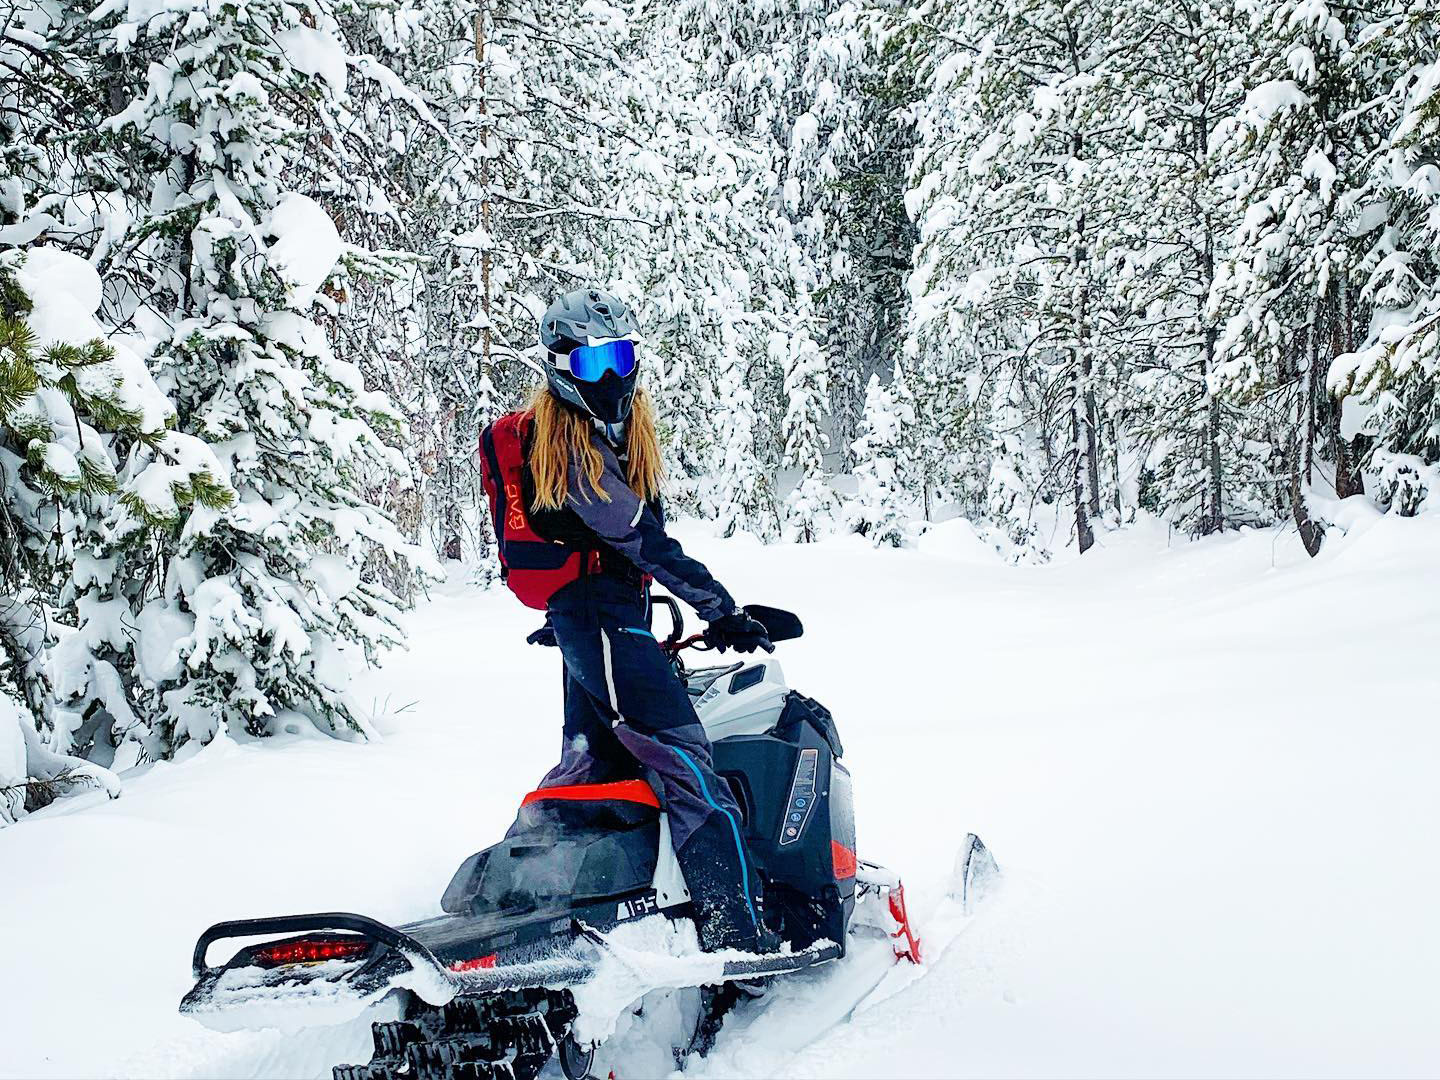 Stefanie Dean sur sa motoneige Ski-Doo dans la neige profonde